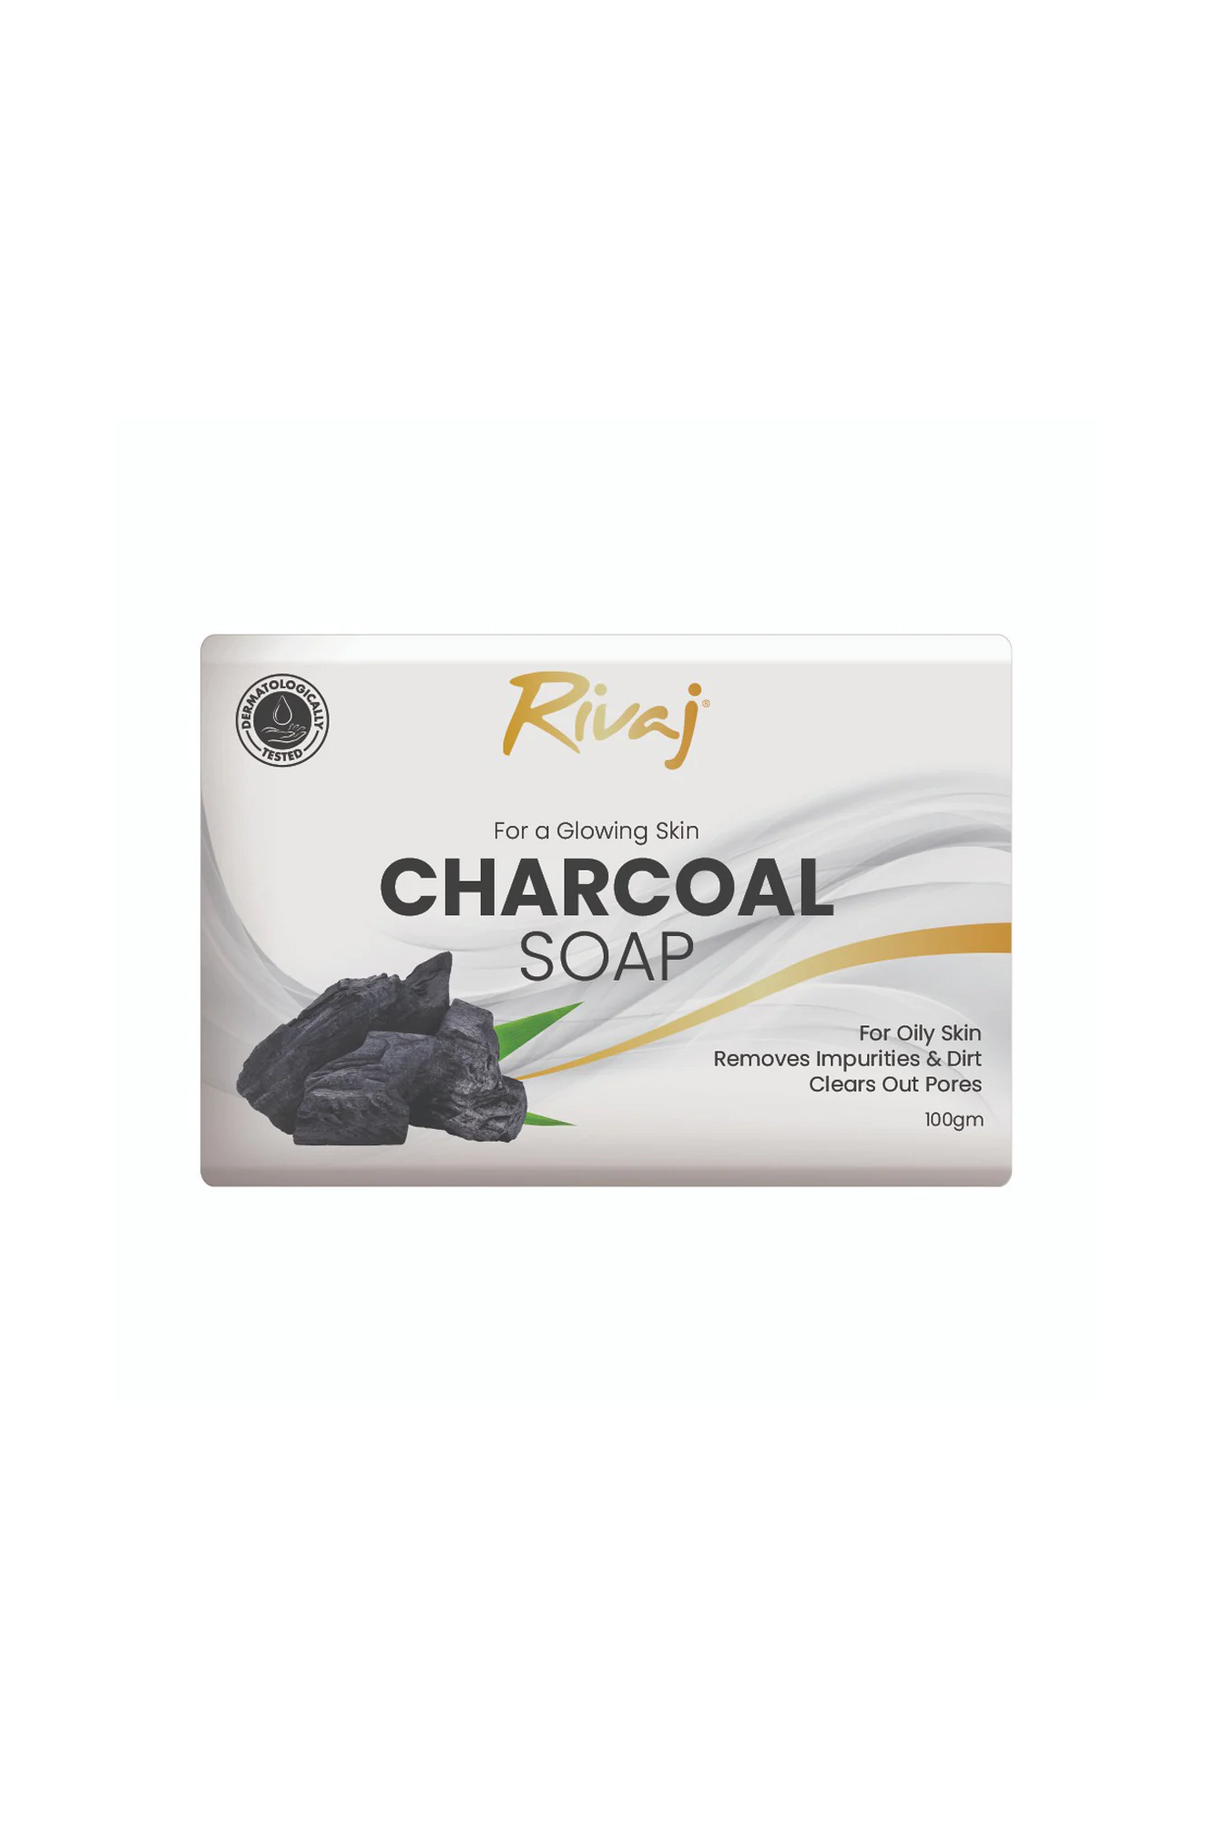 rivaj uk soap charcoal 100g